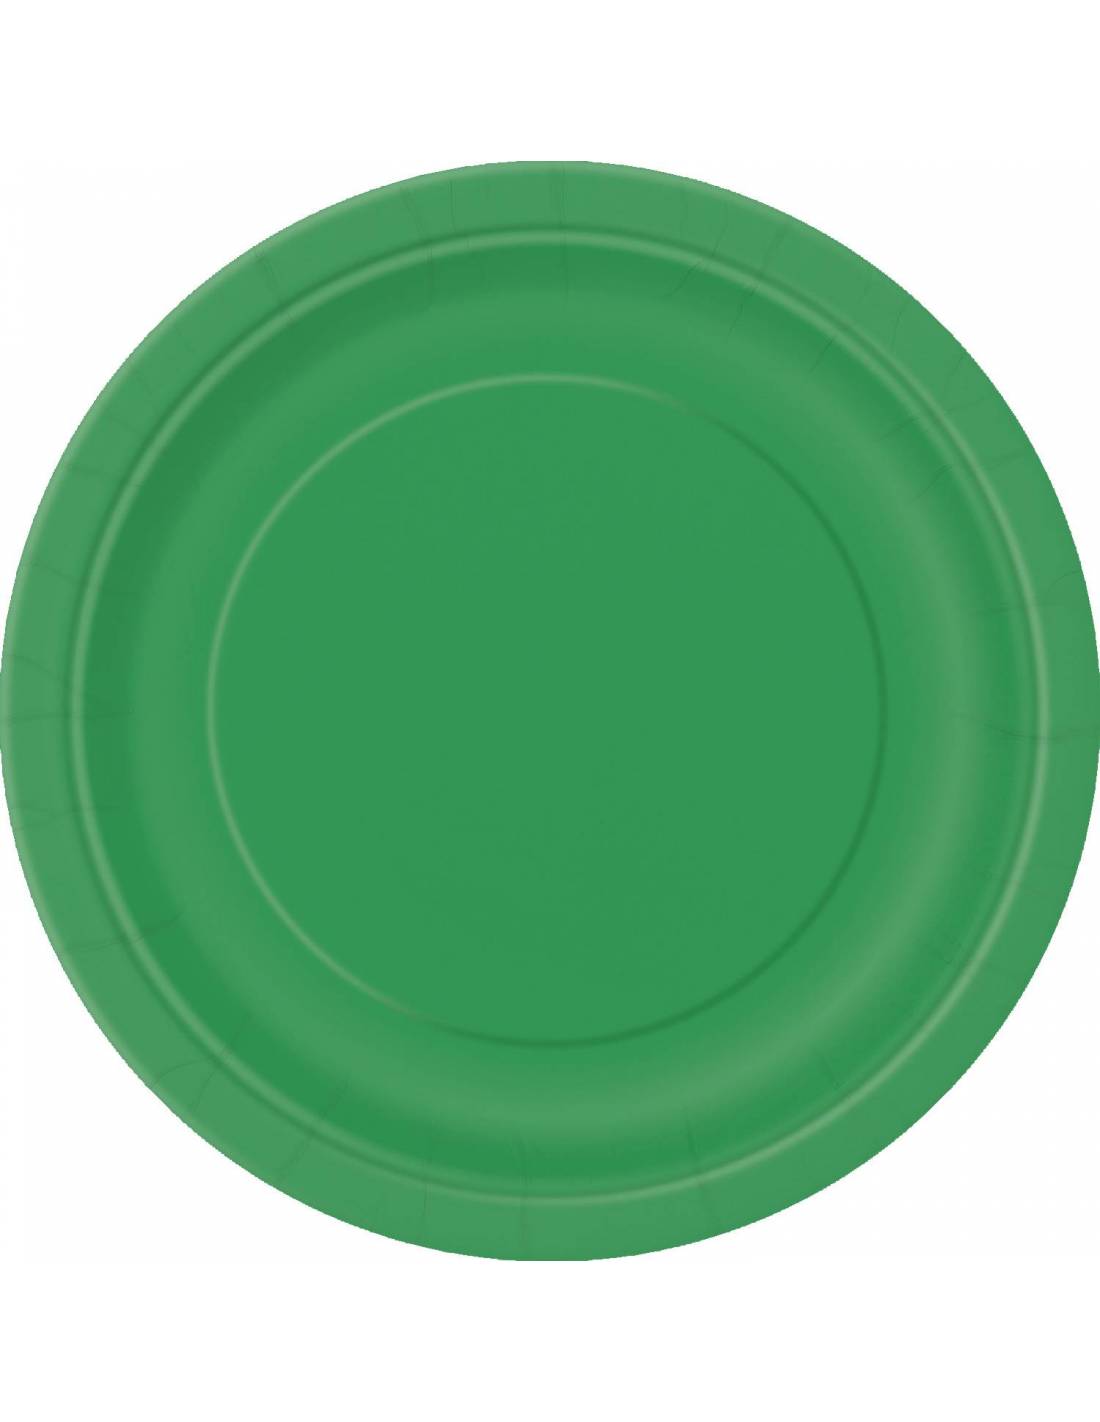 Eco emerald green basic plate